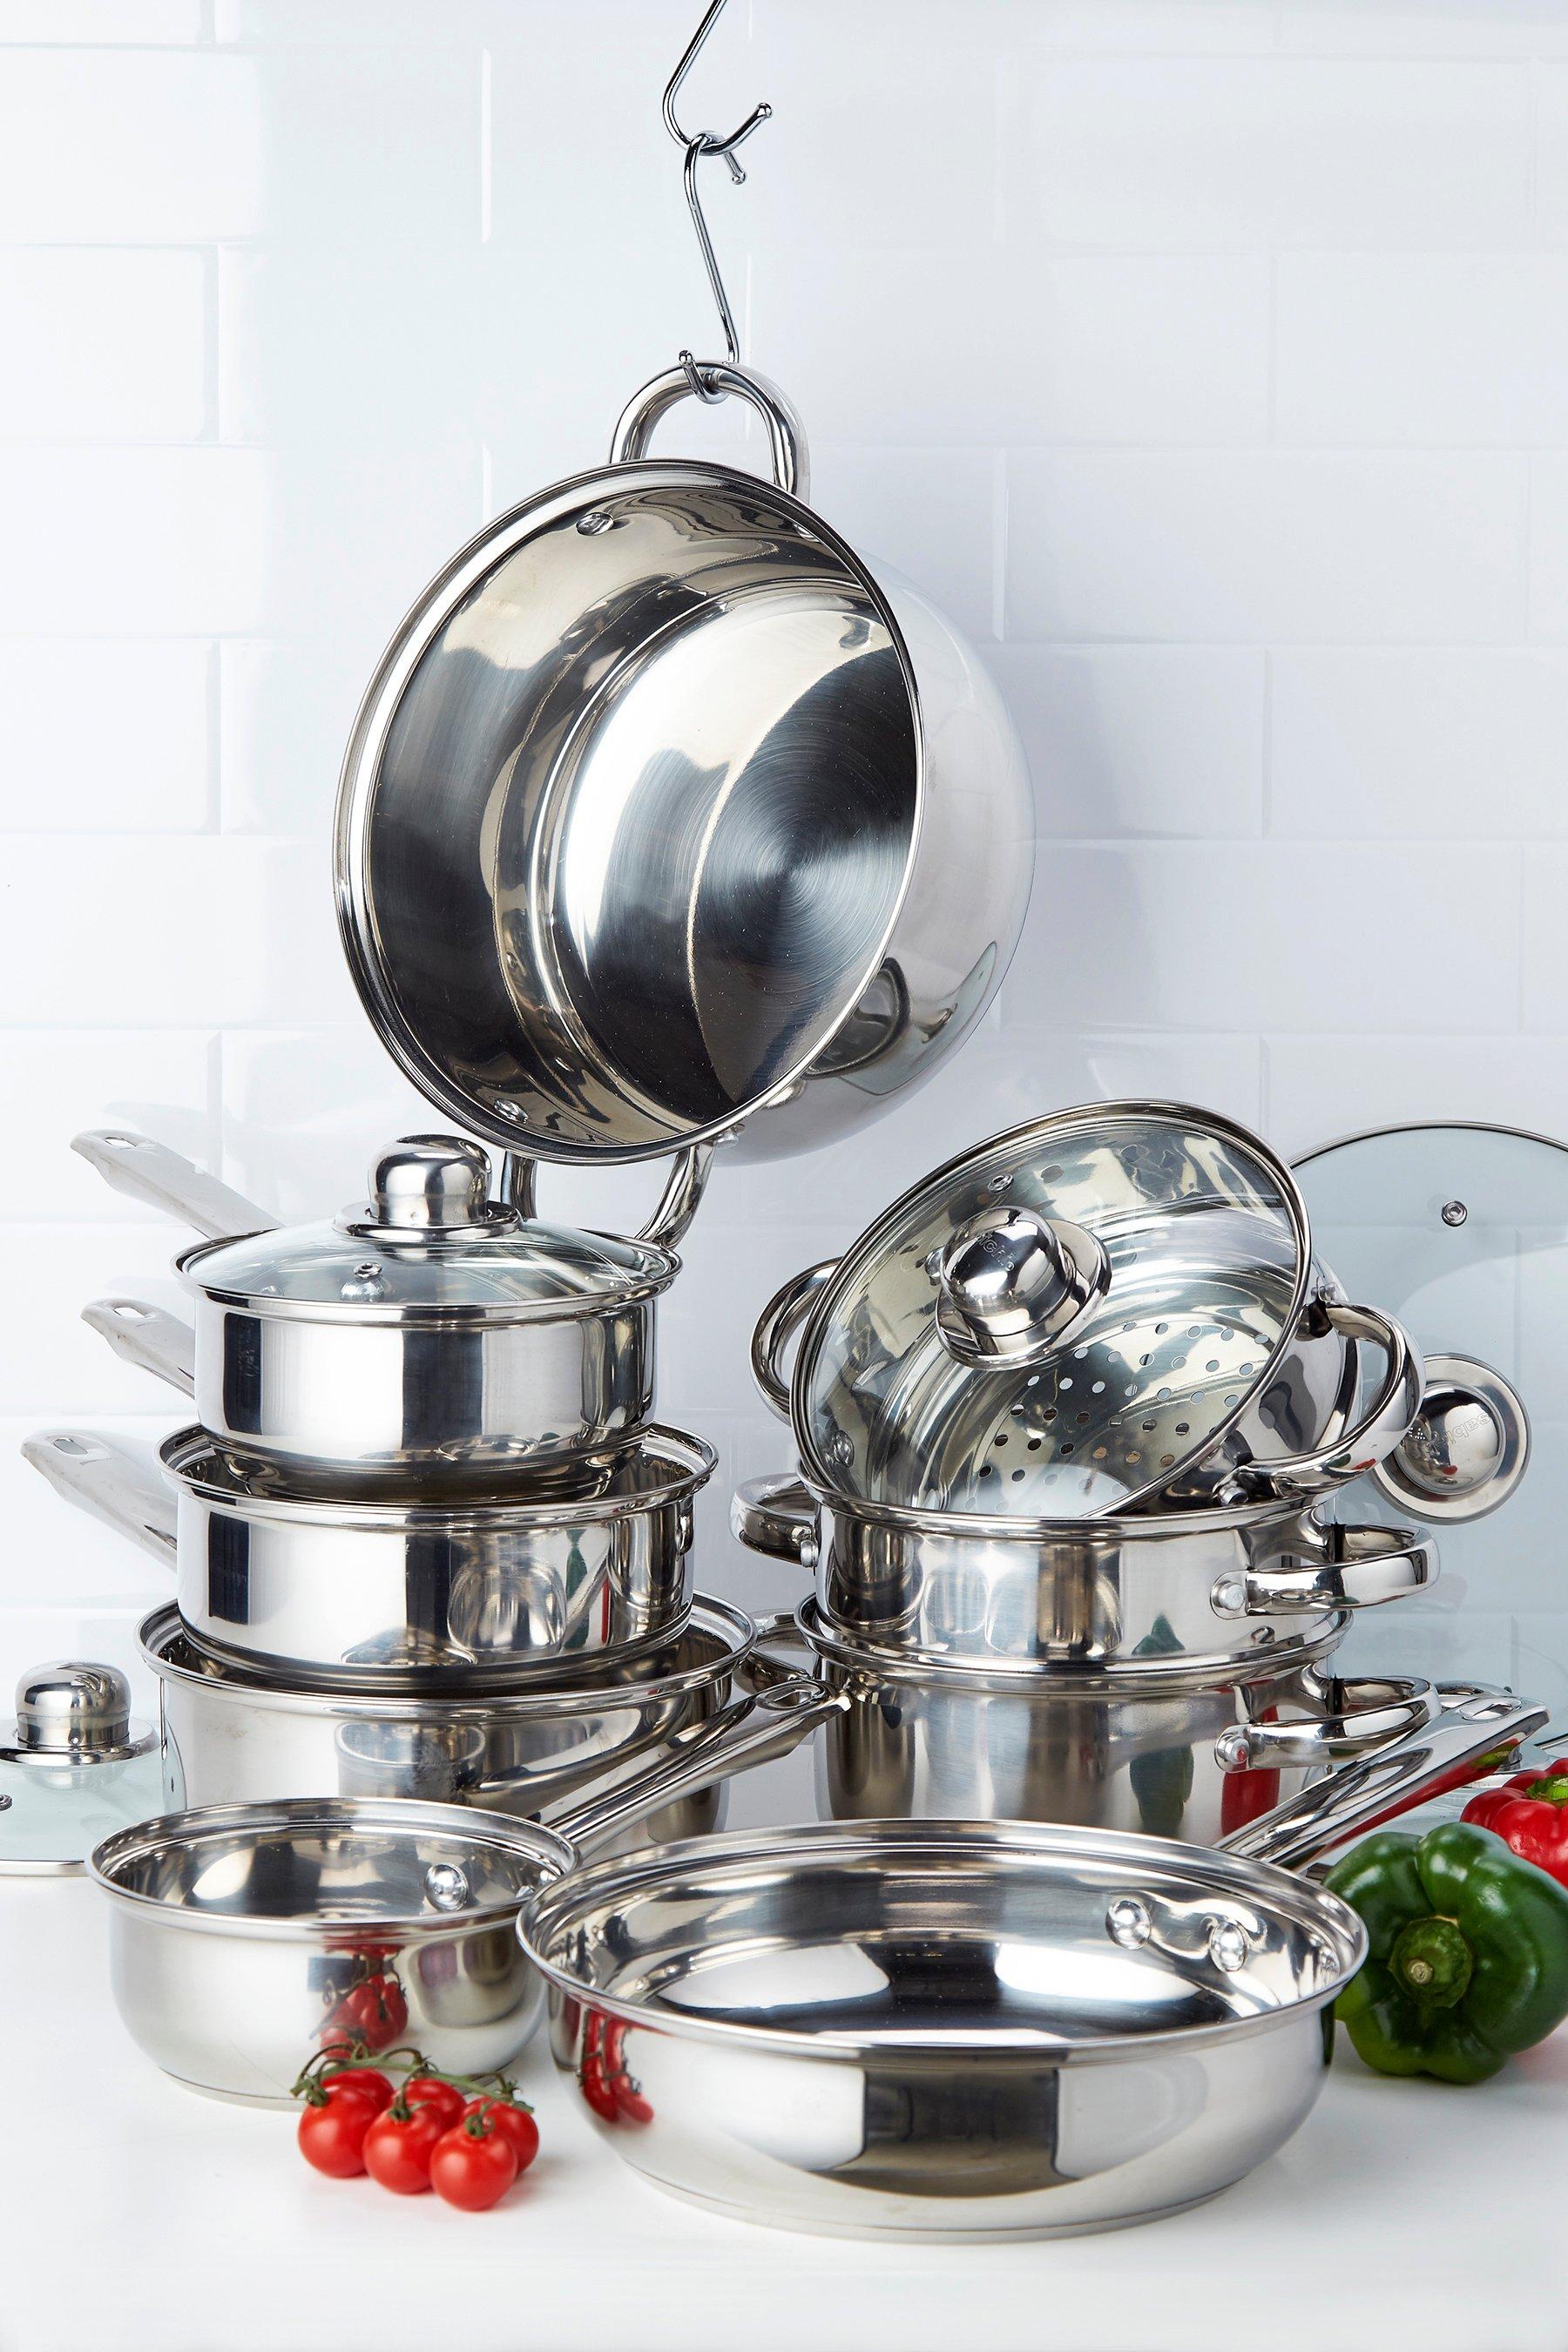 sabichi 9-piece stainless steel cookware set - silver